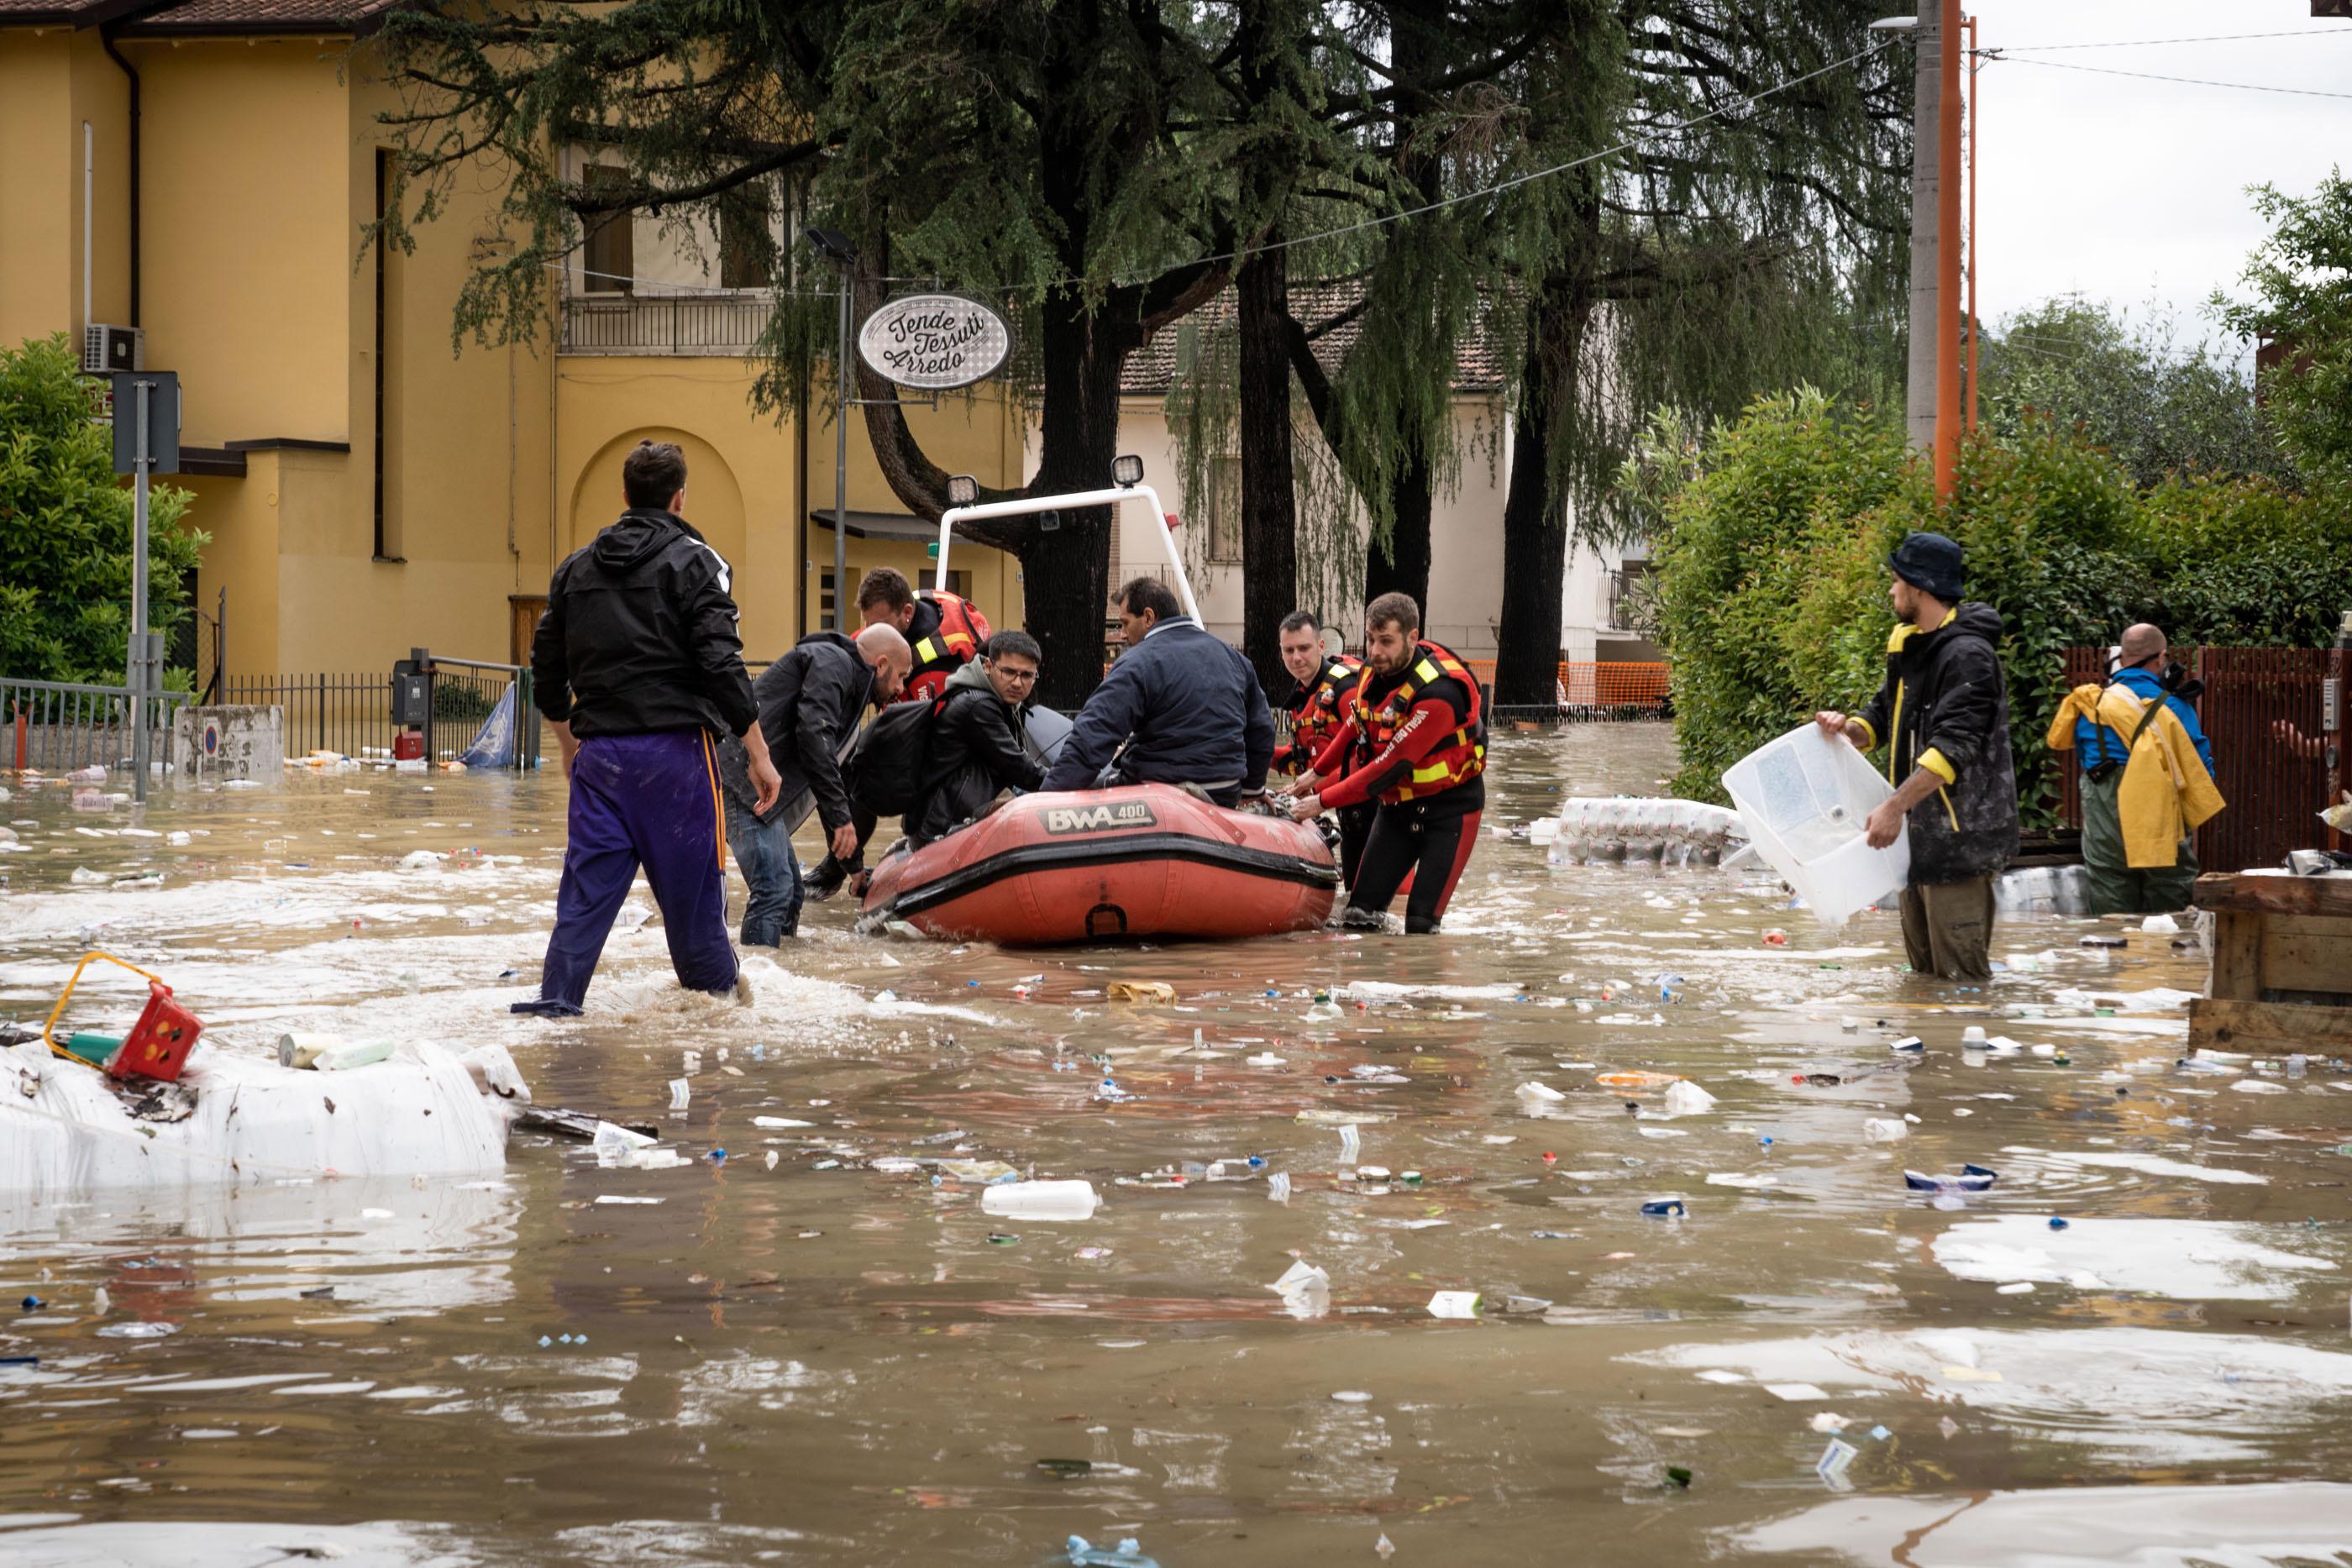 Alluvione Emilia Romagna, "rischio sanitario elevato: evacuare i residenti"